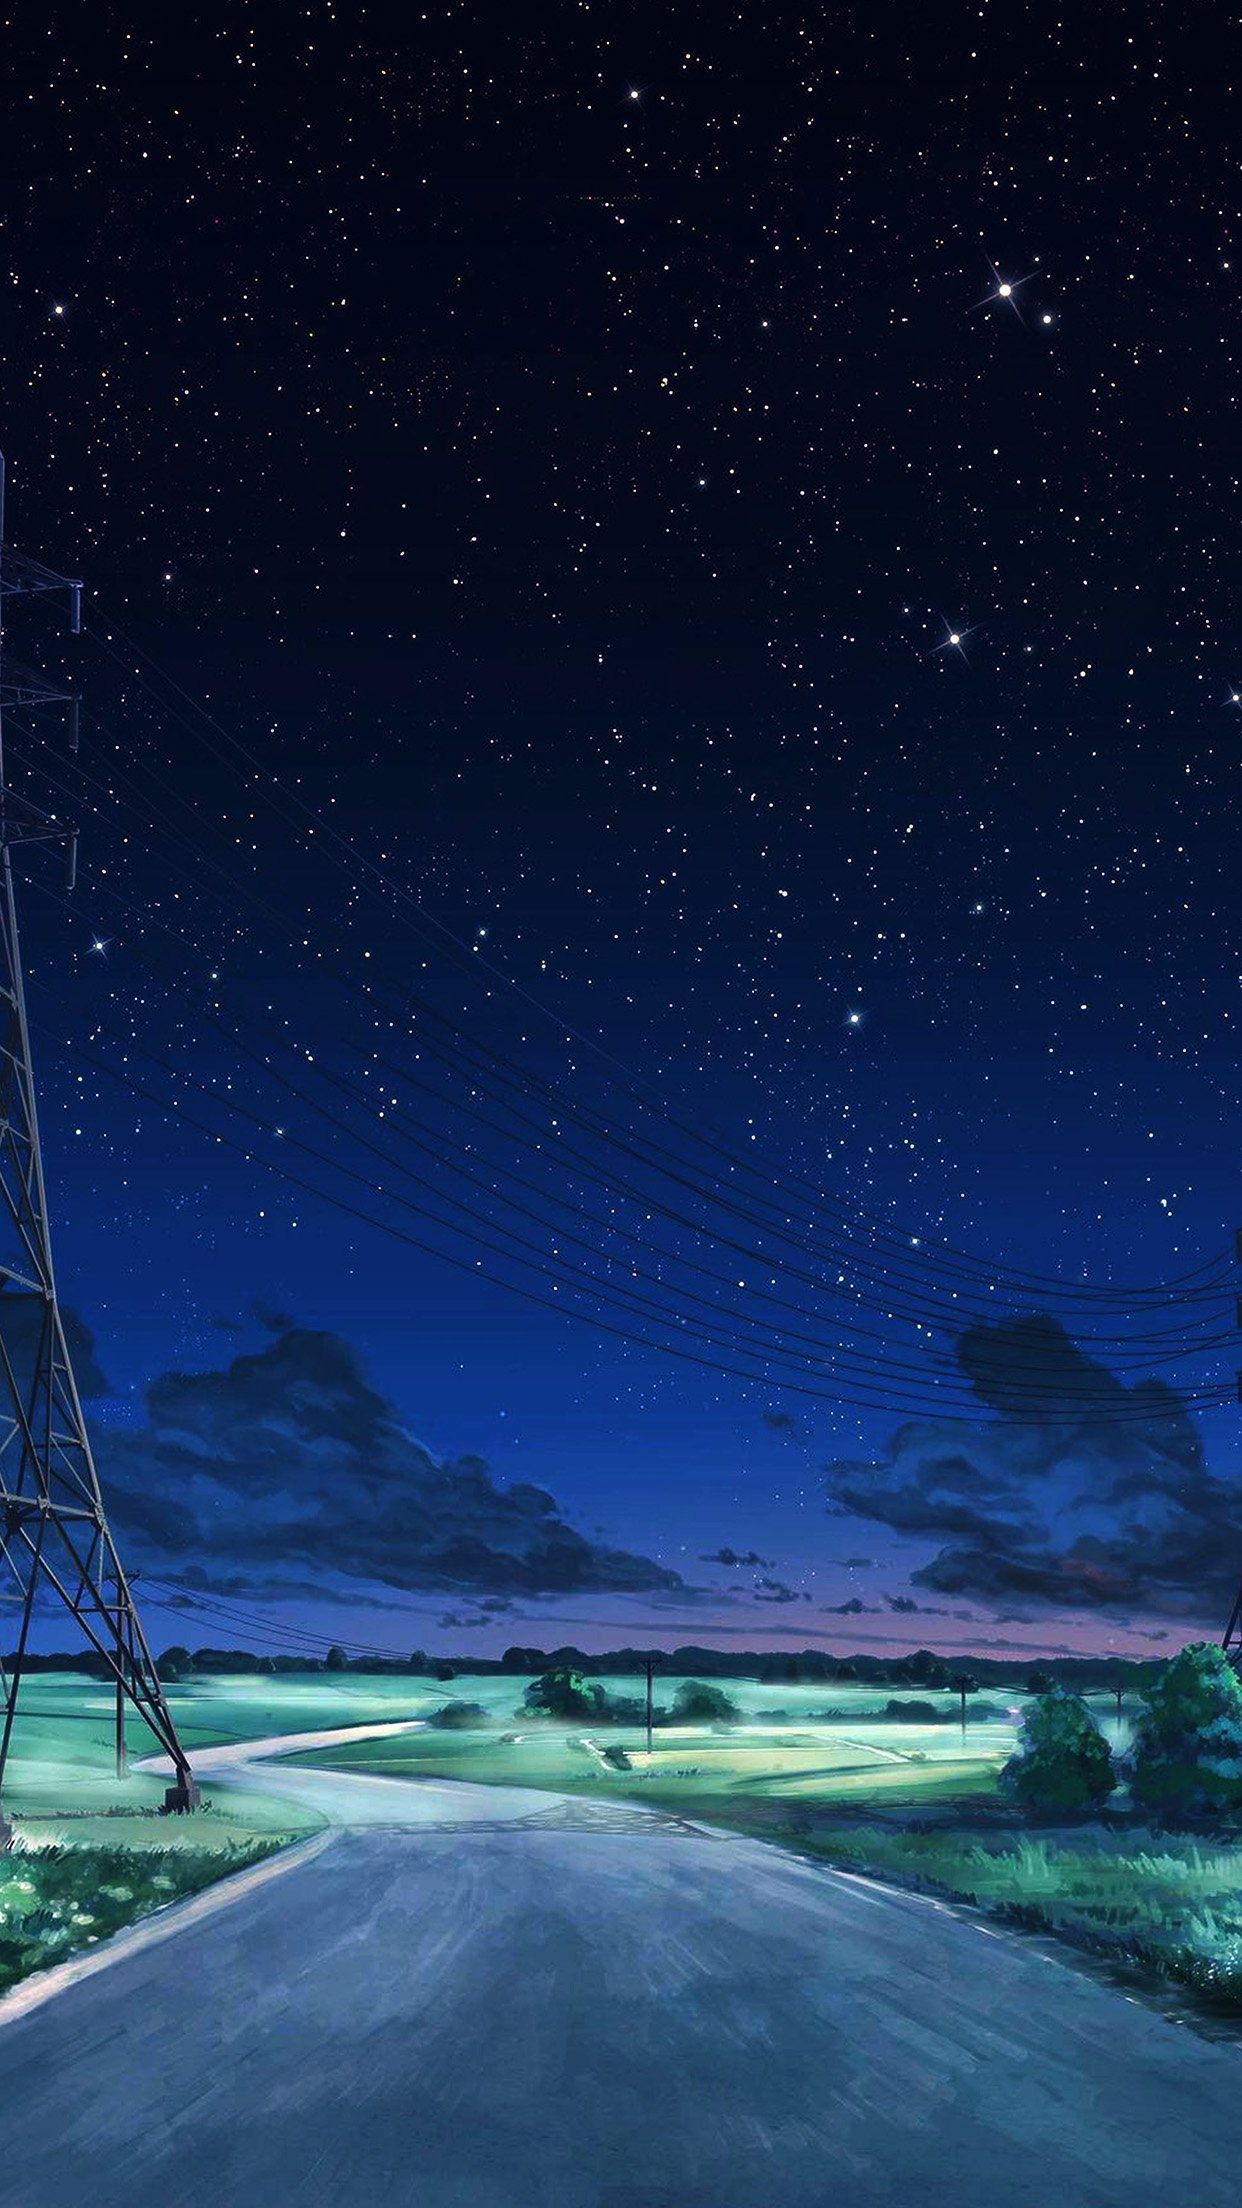 Anime Girl And Night Stars Wallpapers